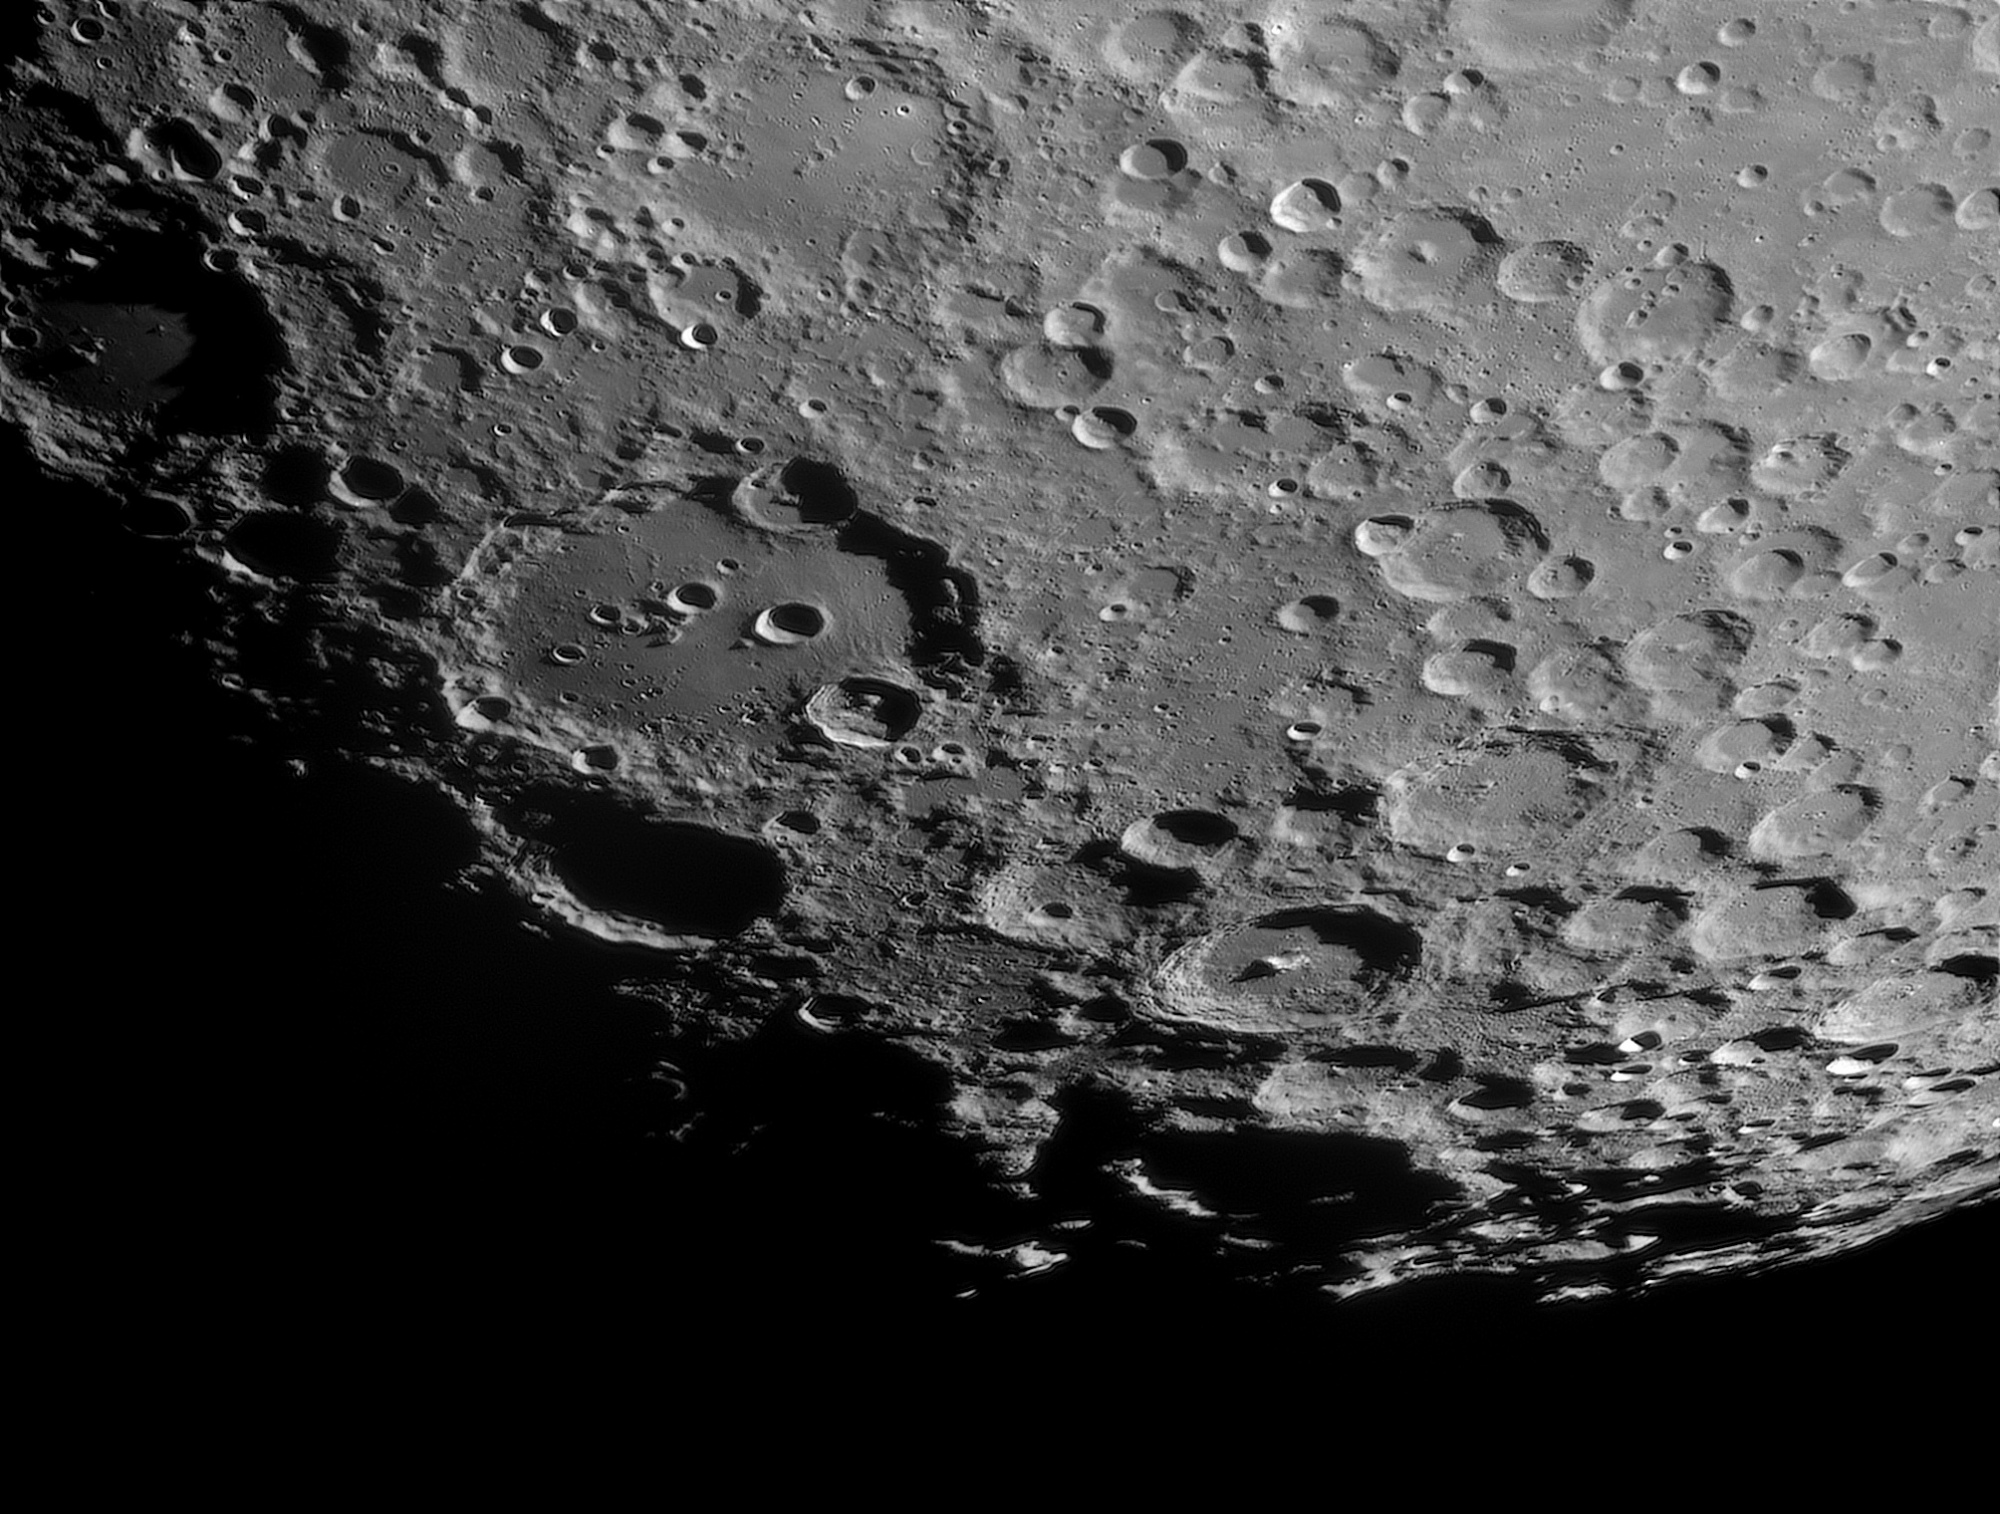 Lune-20240319_Clavius-ba-05-AS.thumb.jpg.7be86e638deb80e9c6fbe98f4f0c853a.jpg